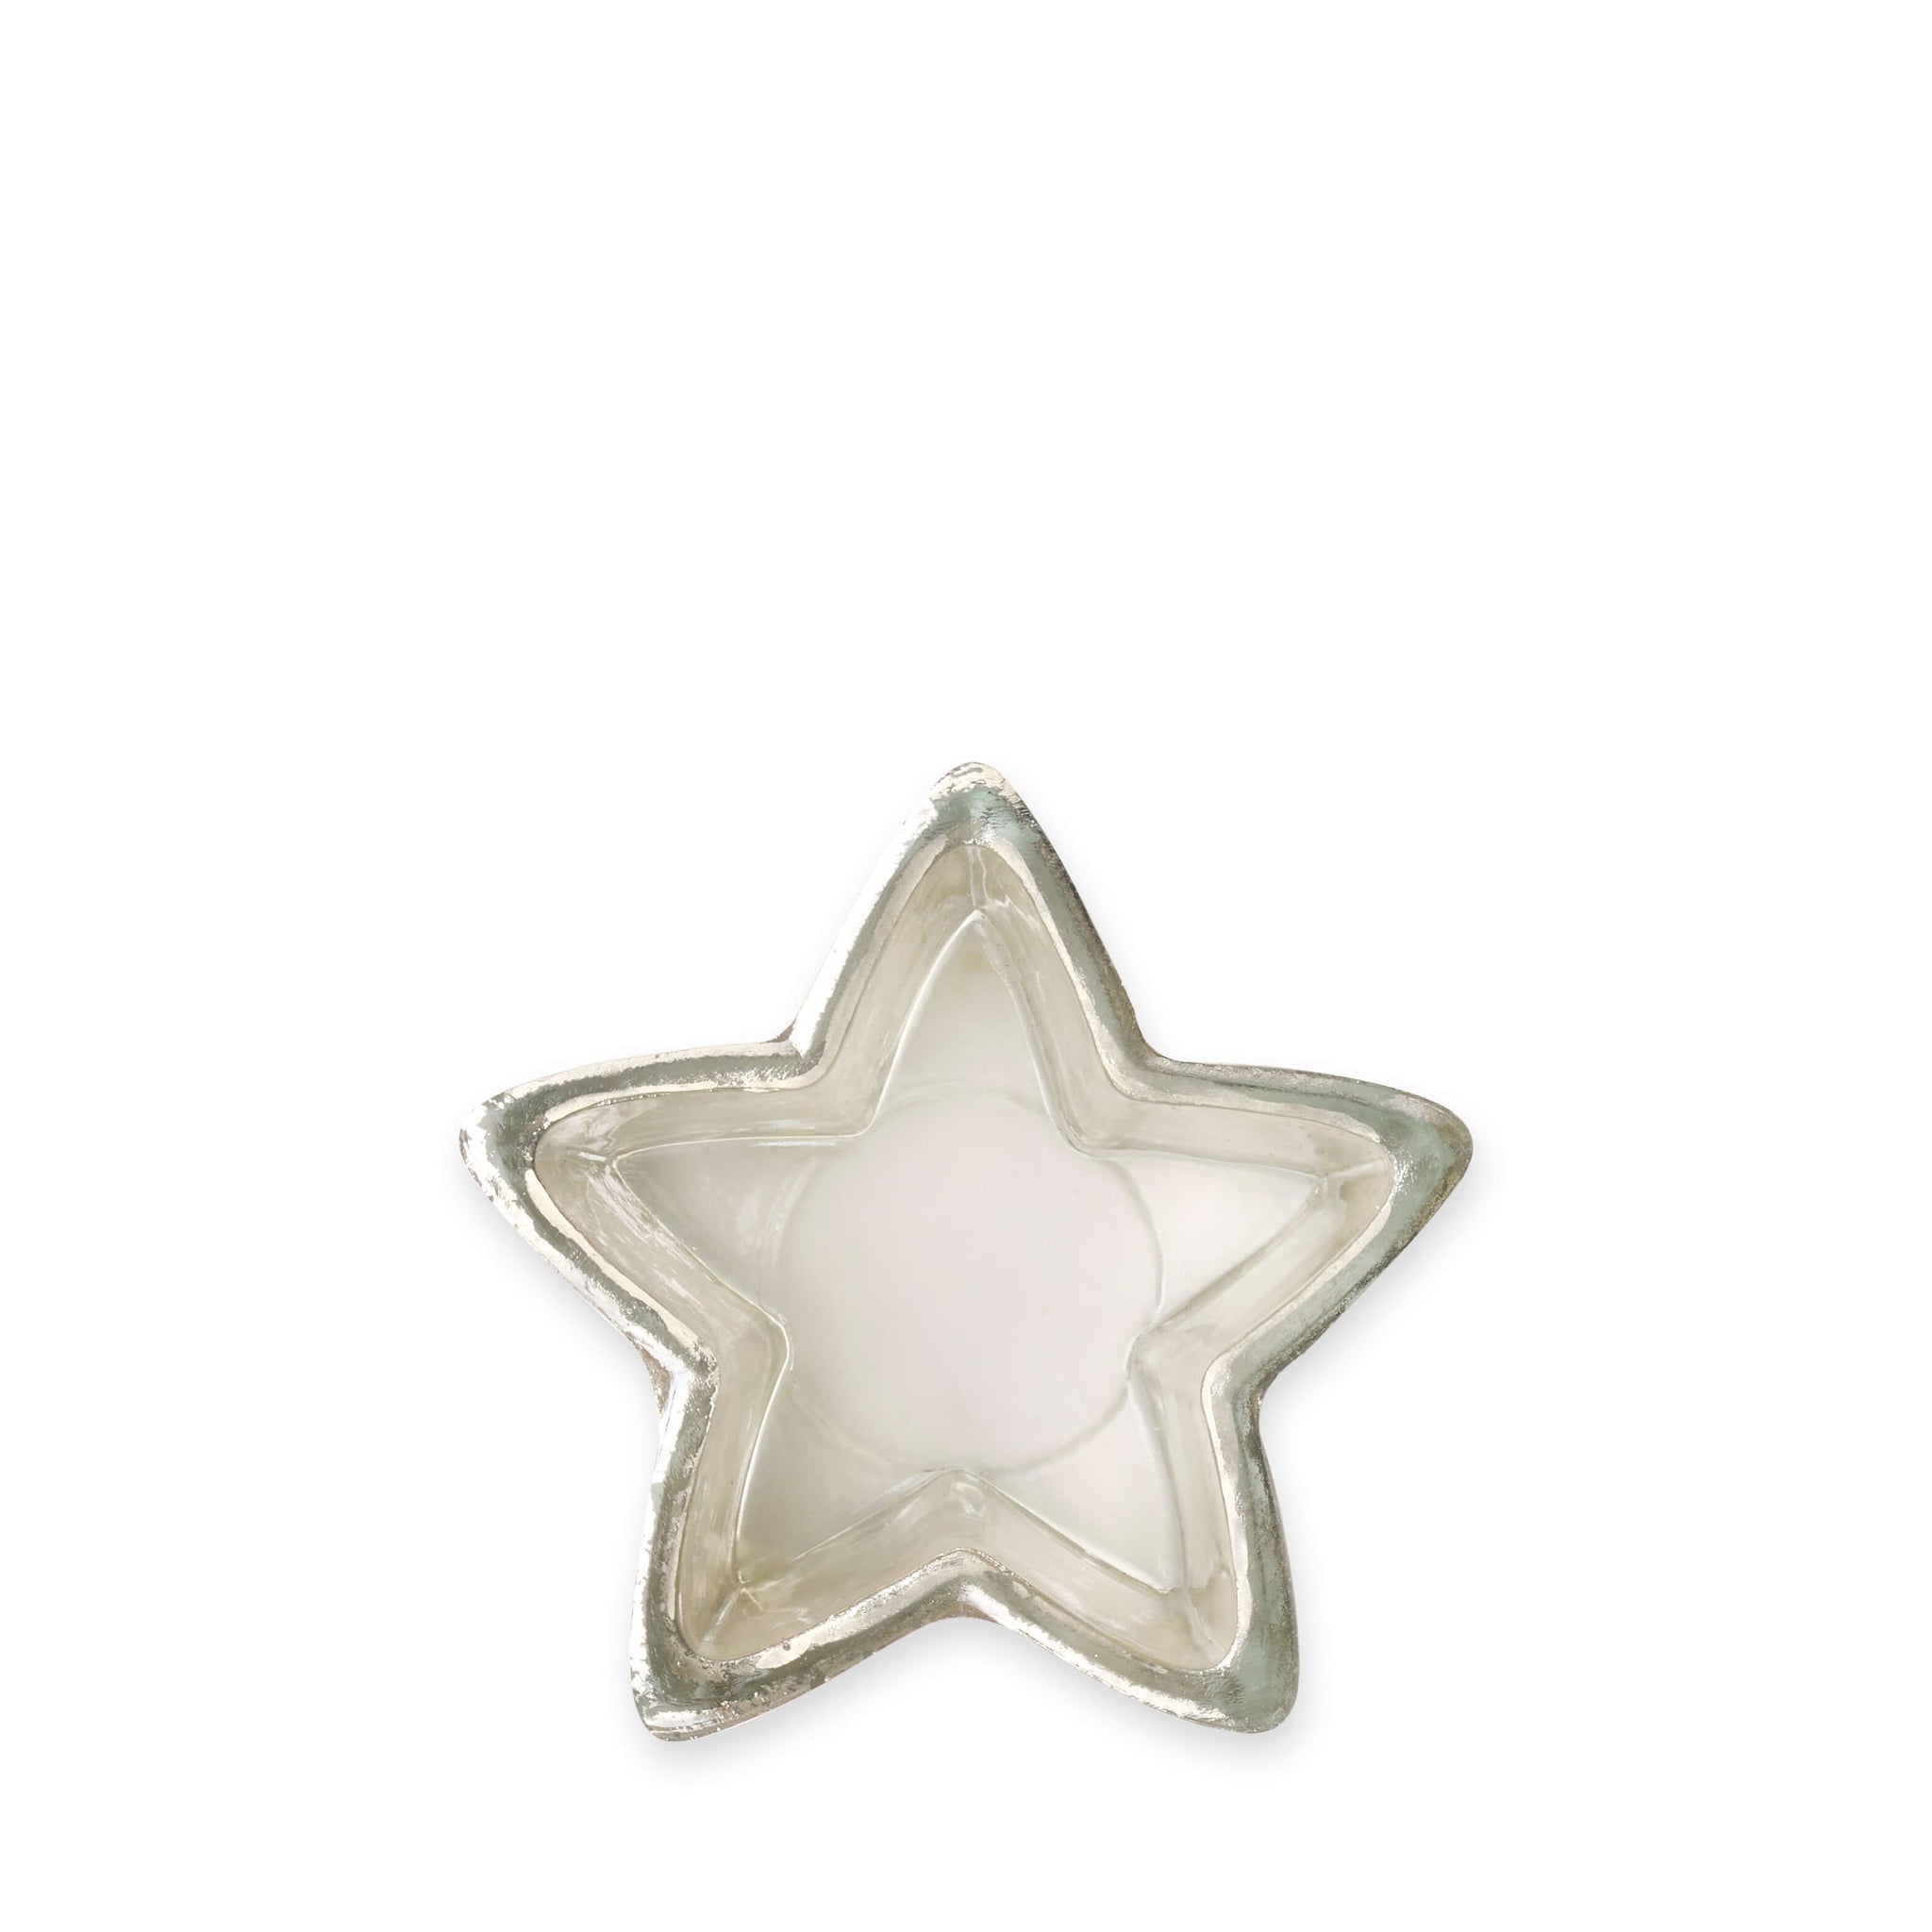 Antiqued Silver Star Tea Light Holder